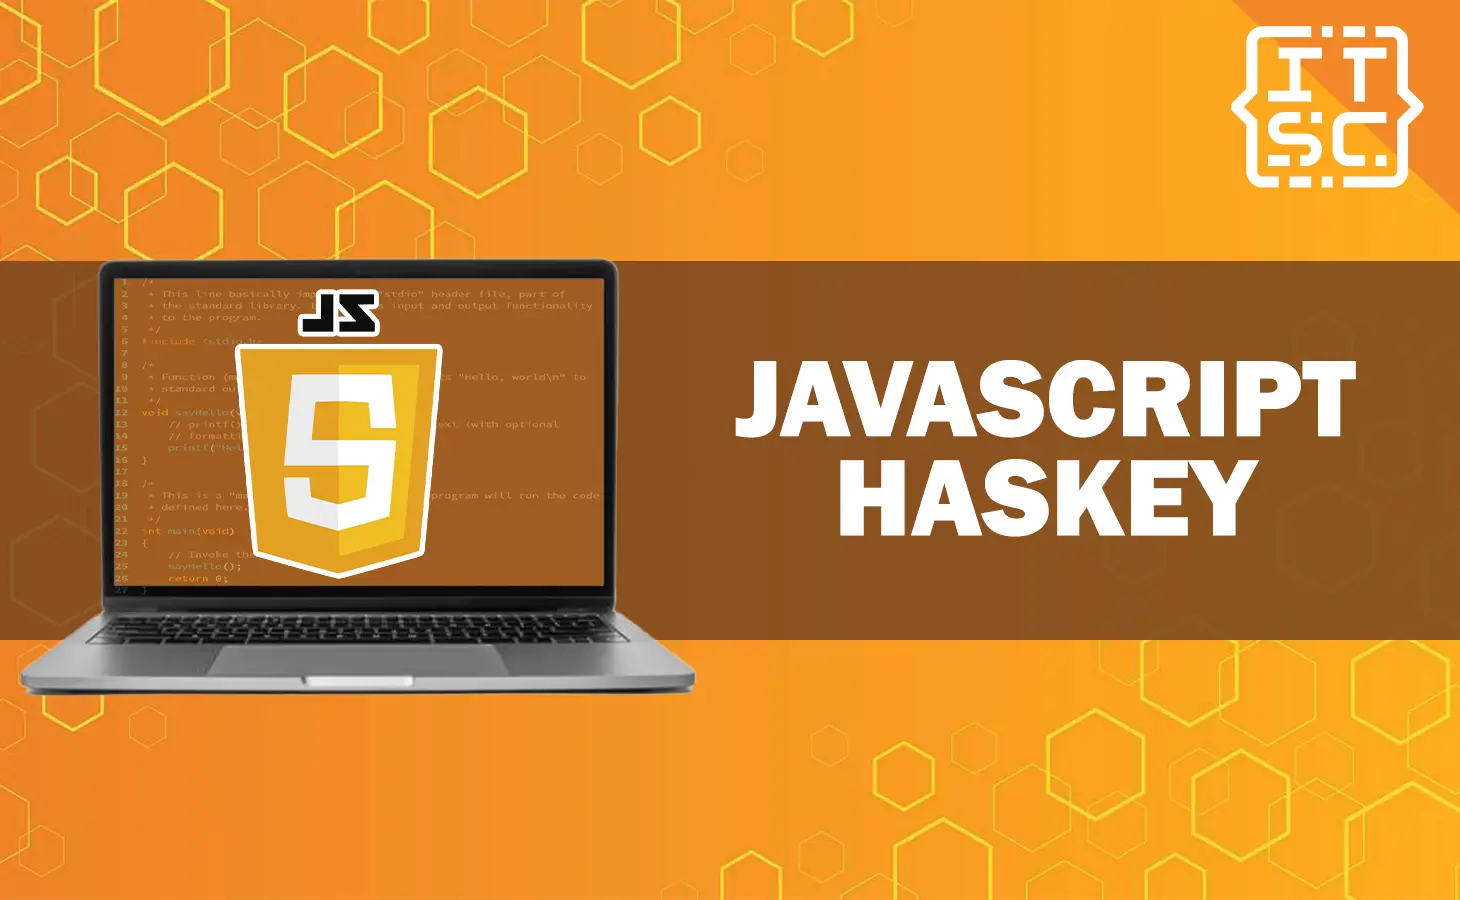 JavaScript haskey